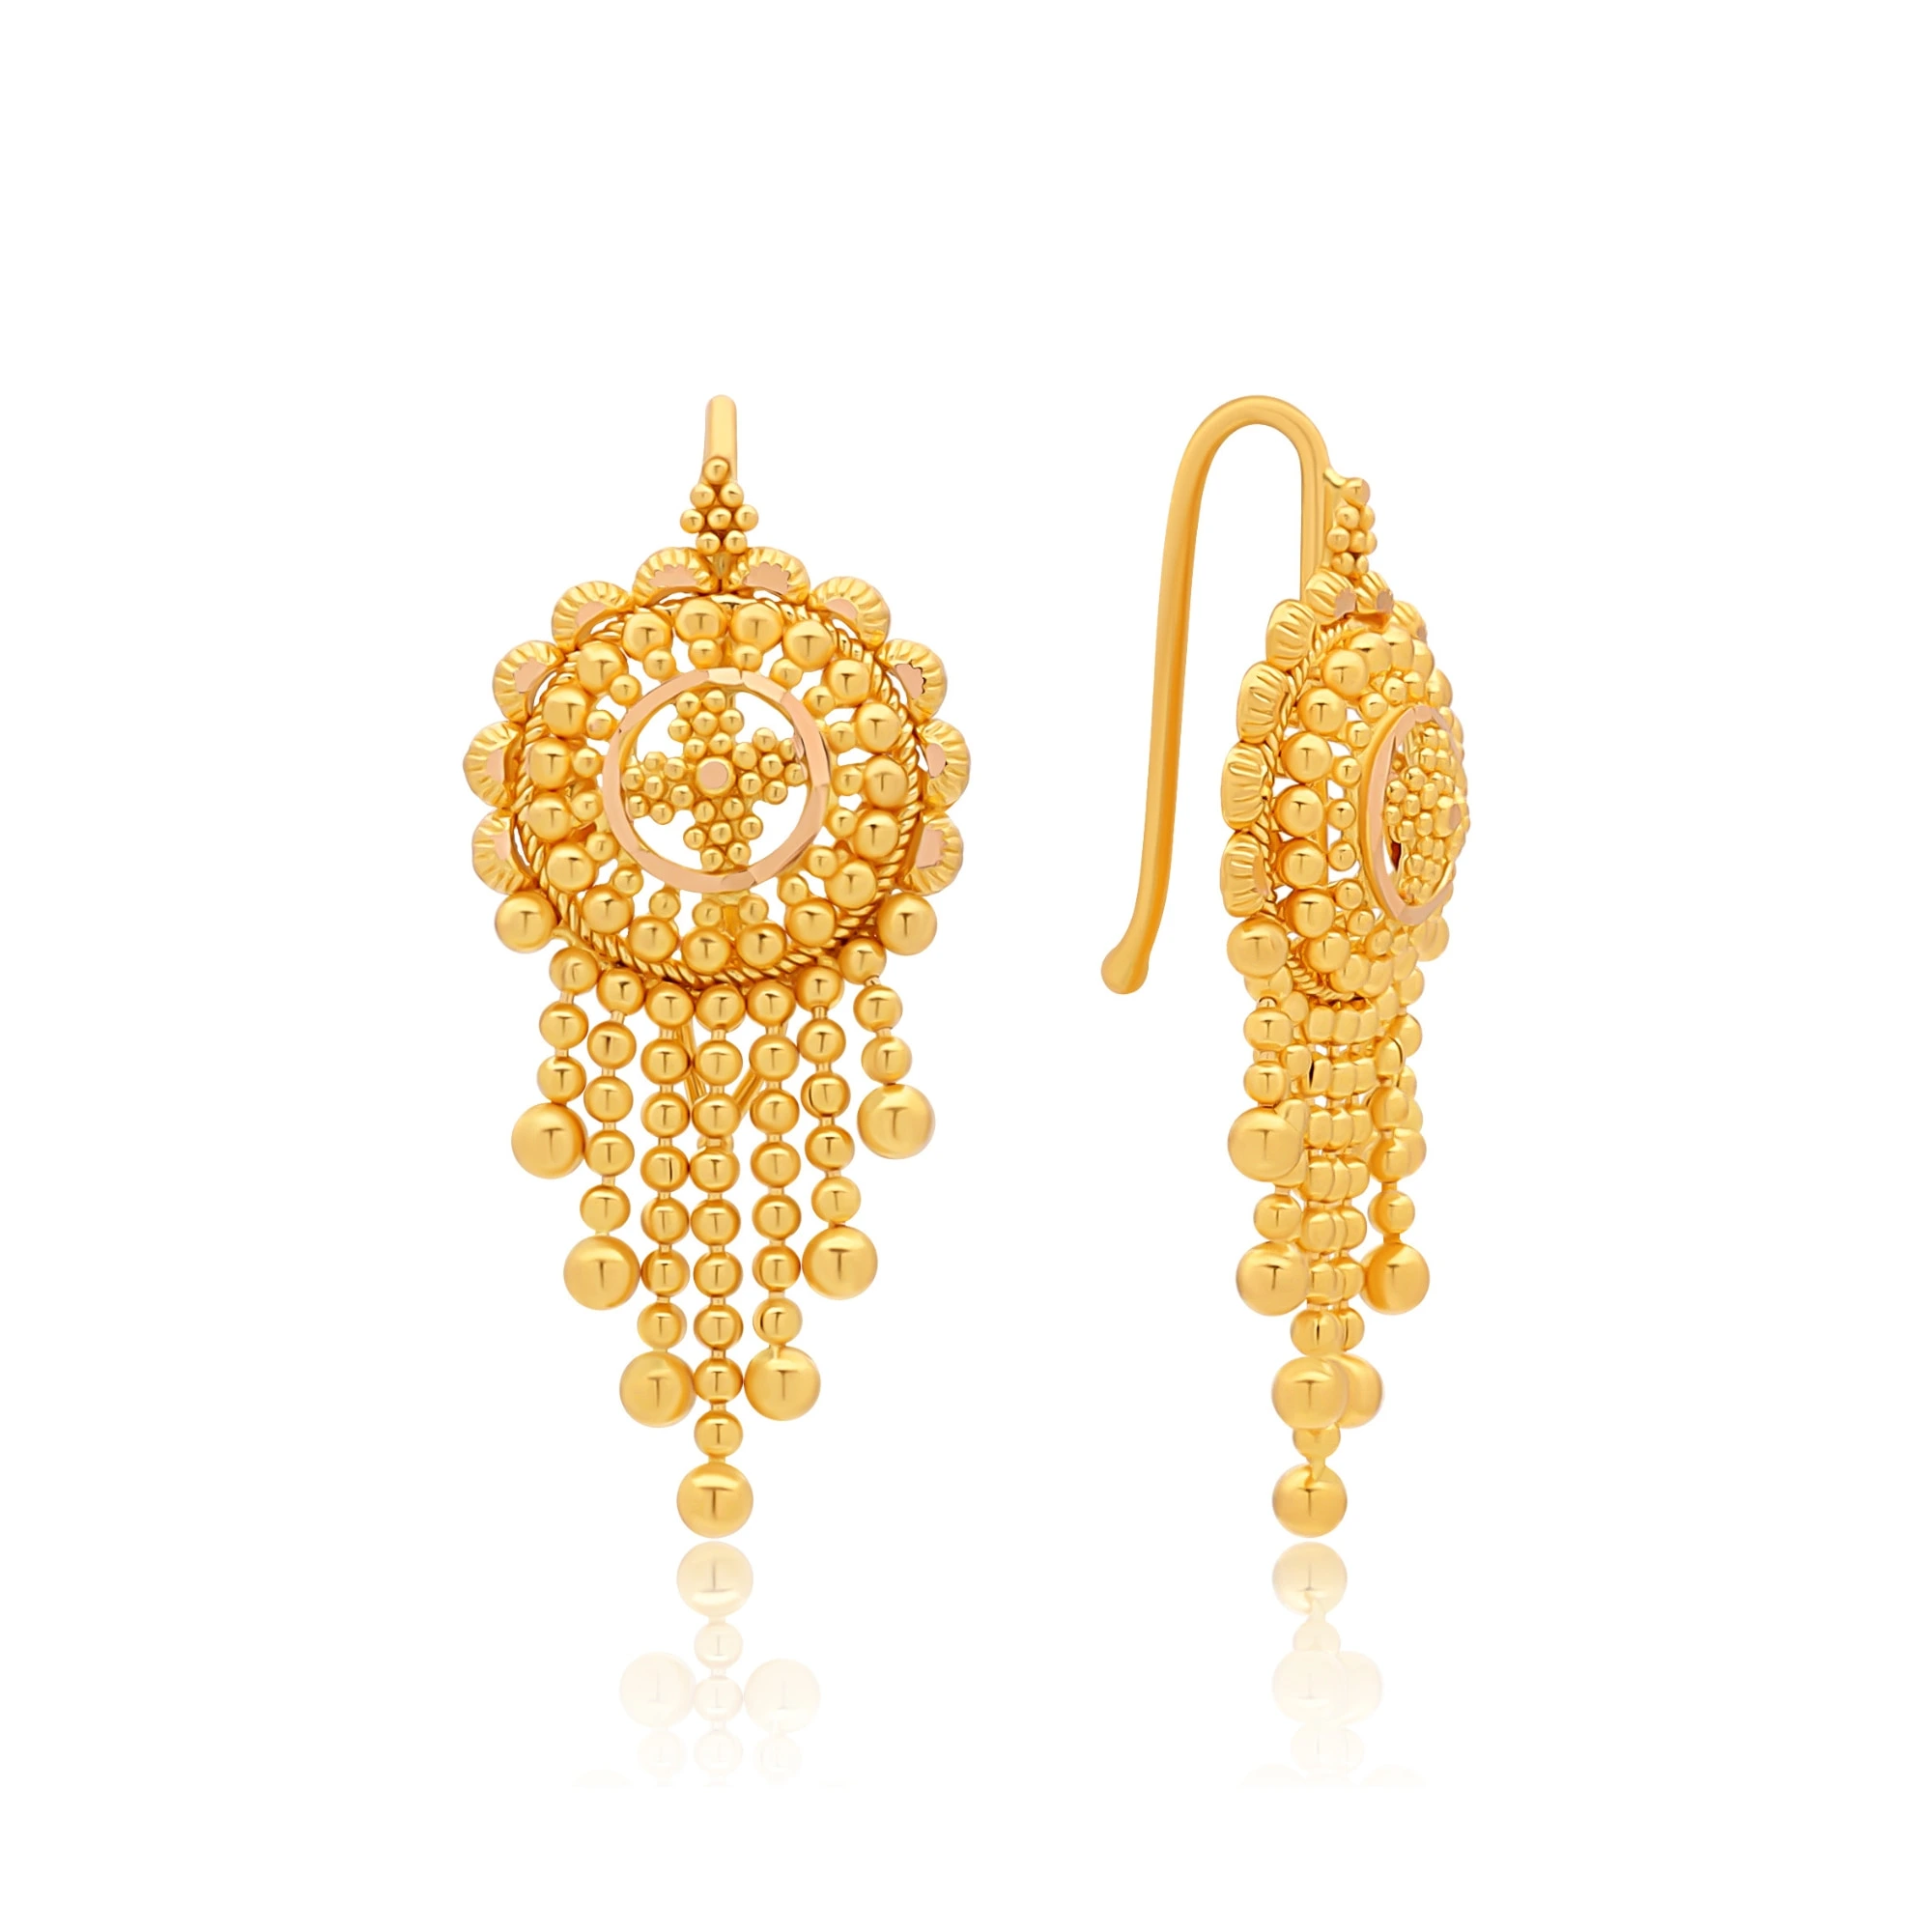 Gold earrings - Ref No K-445.01 / Apart